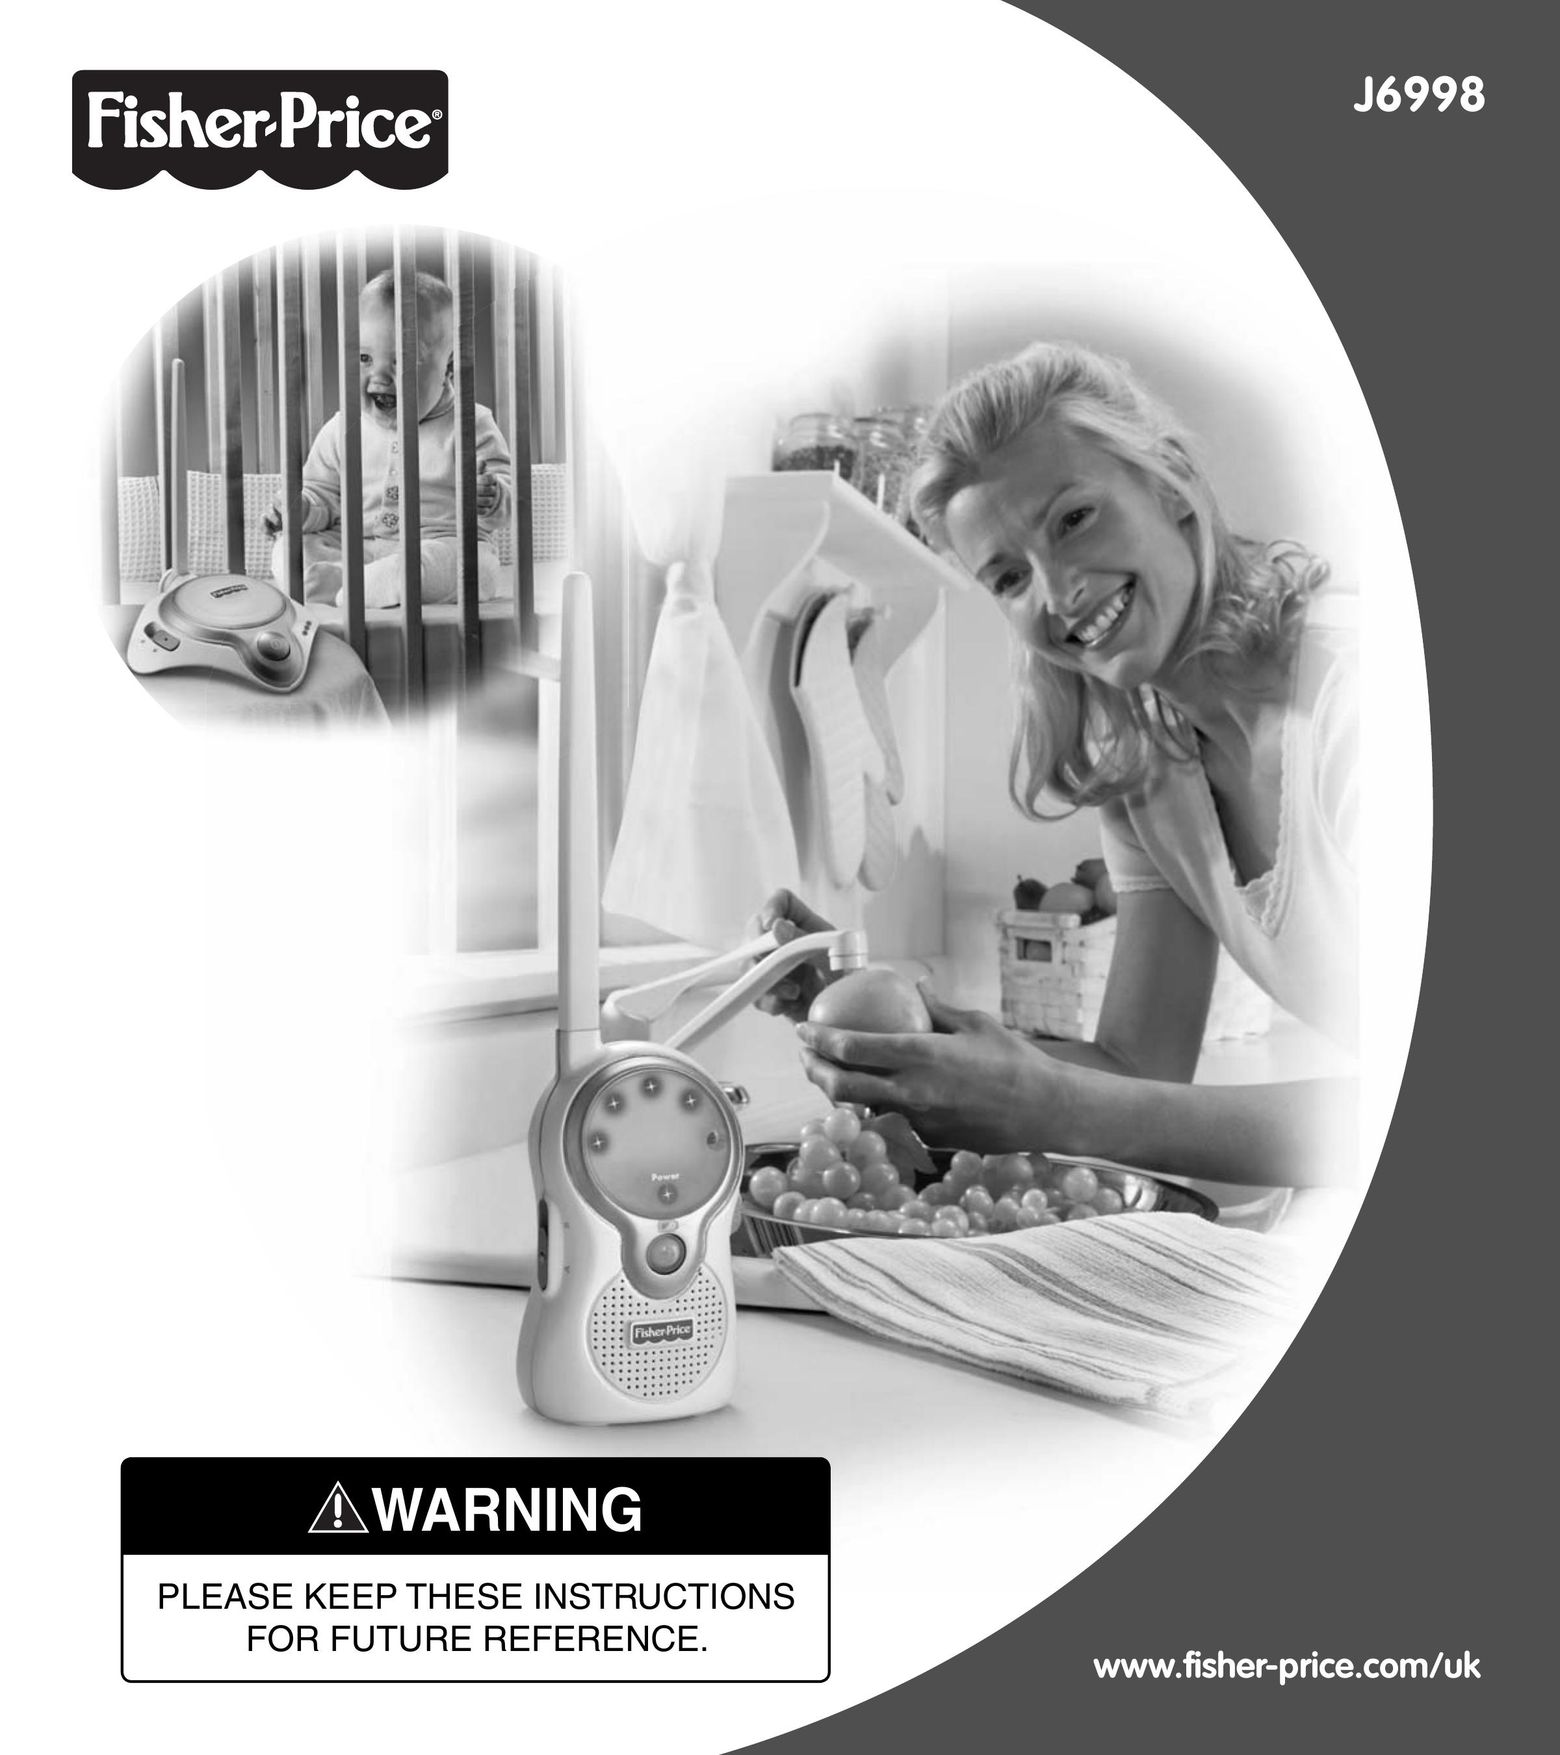 Fisher-Price J6998 Baby Monitor User Manual